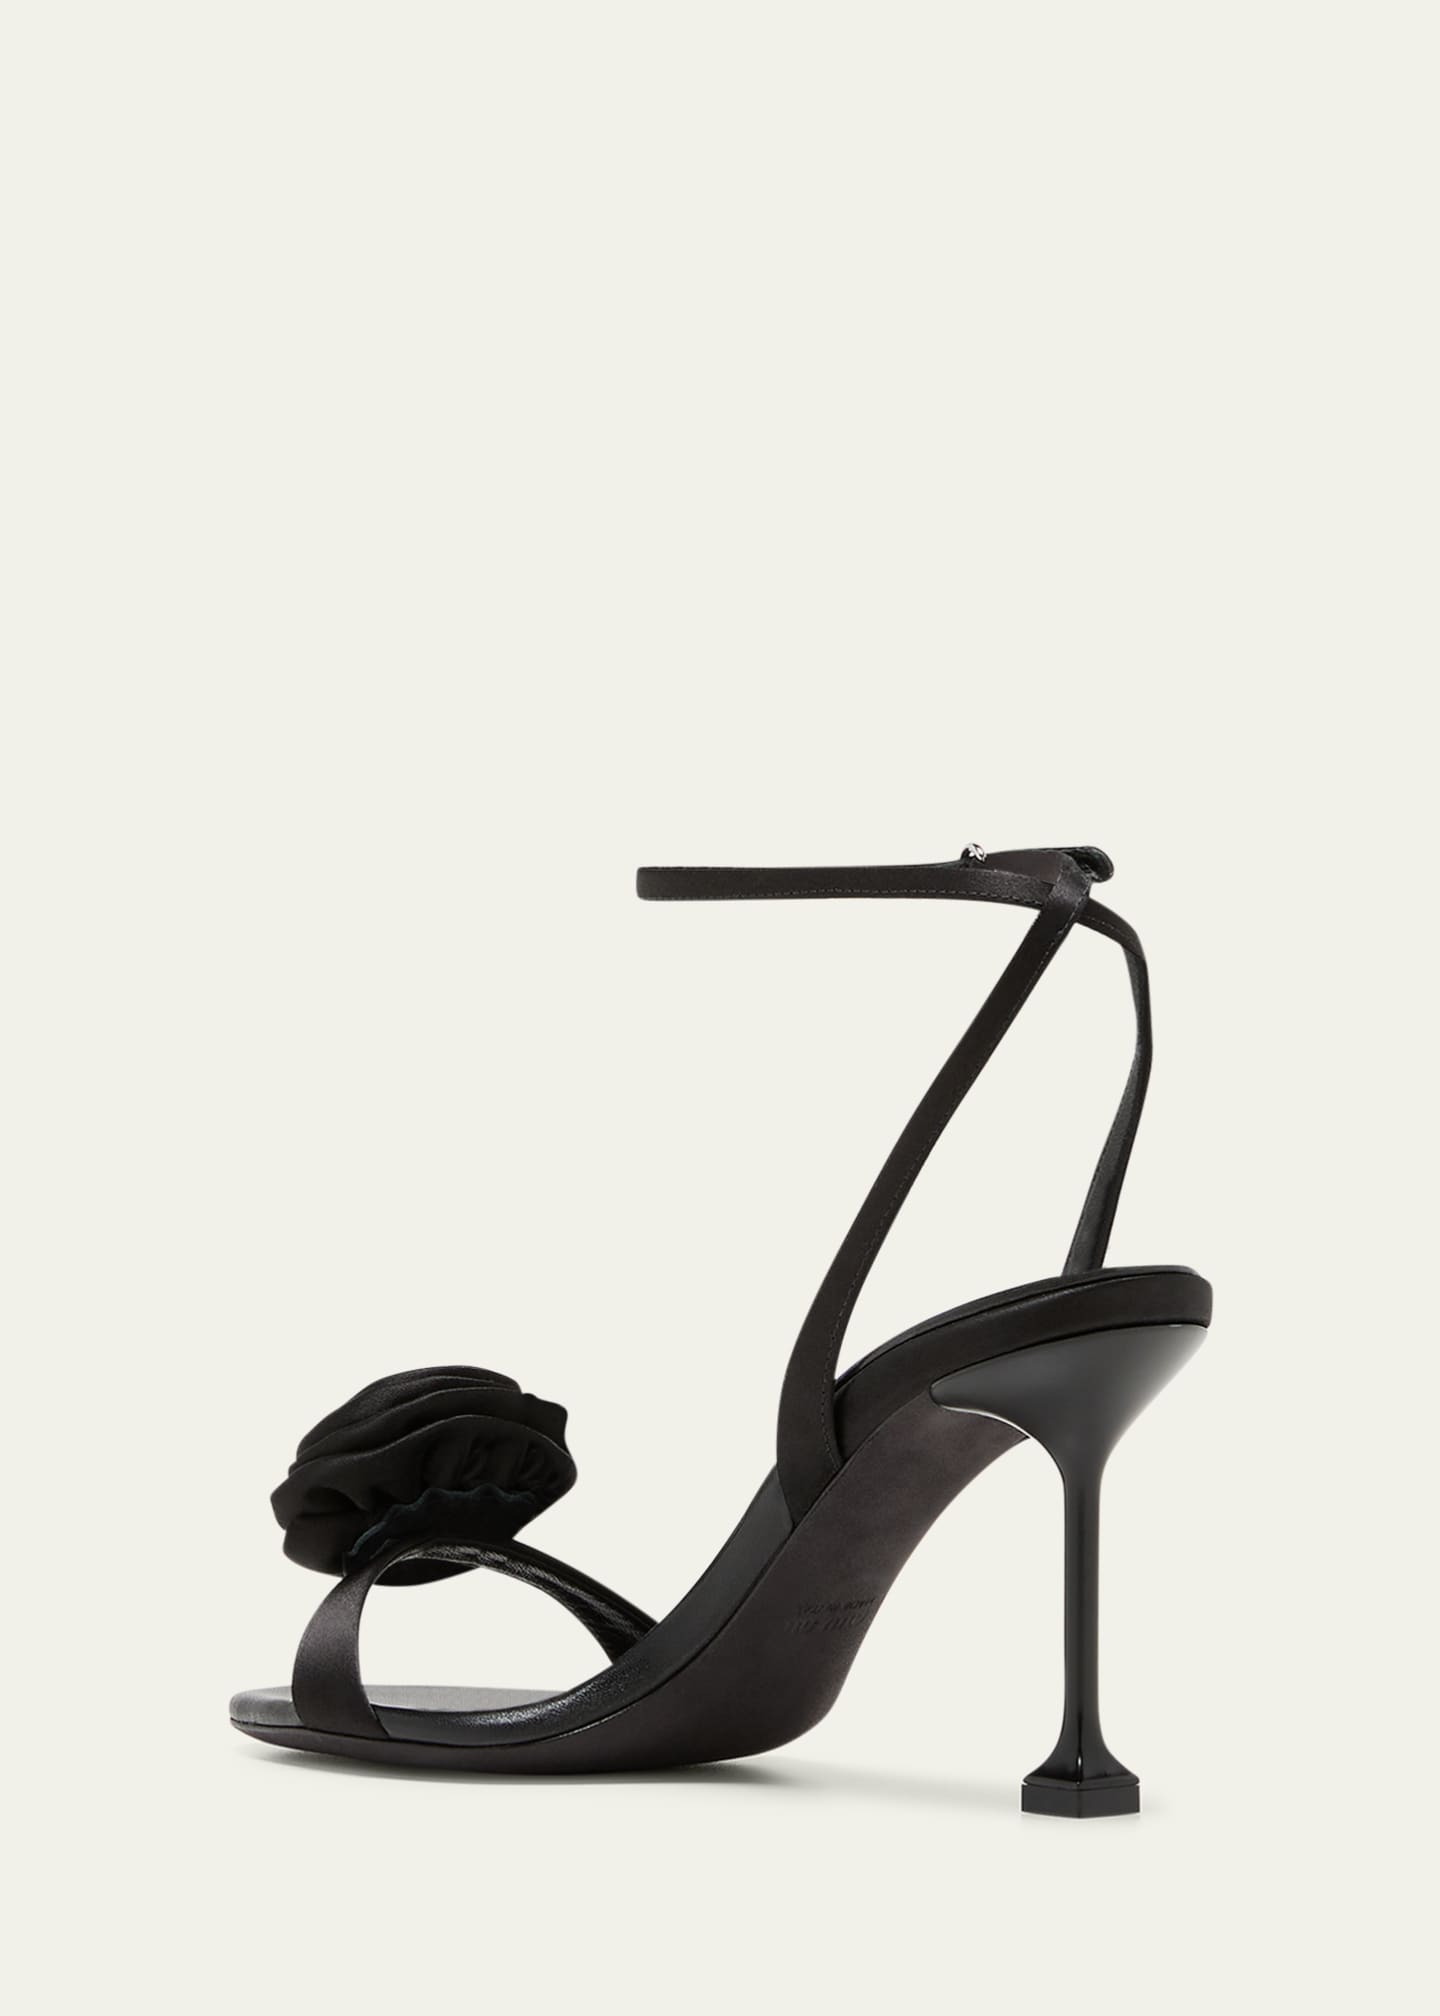 Miu Miu Satin Flower Ankle-Strap Sandals - Bergdorf Goodman